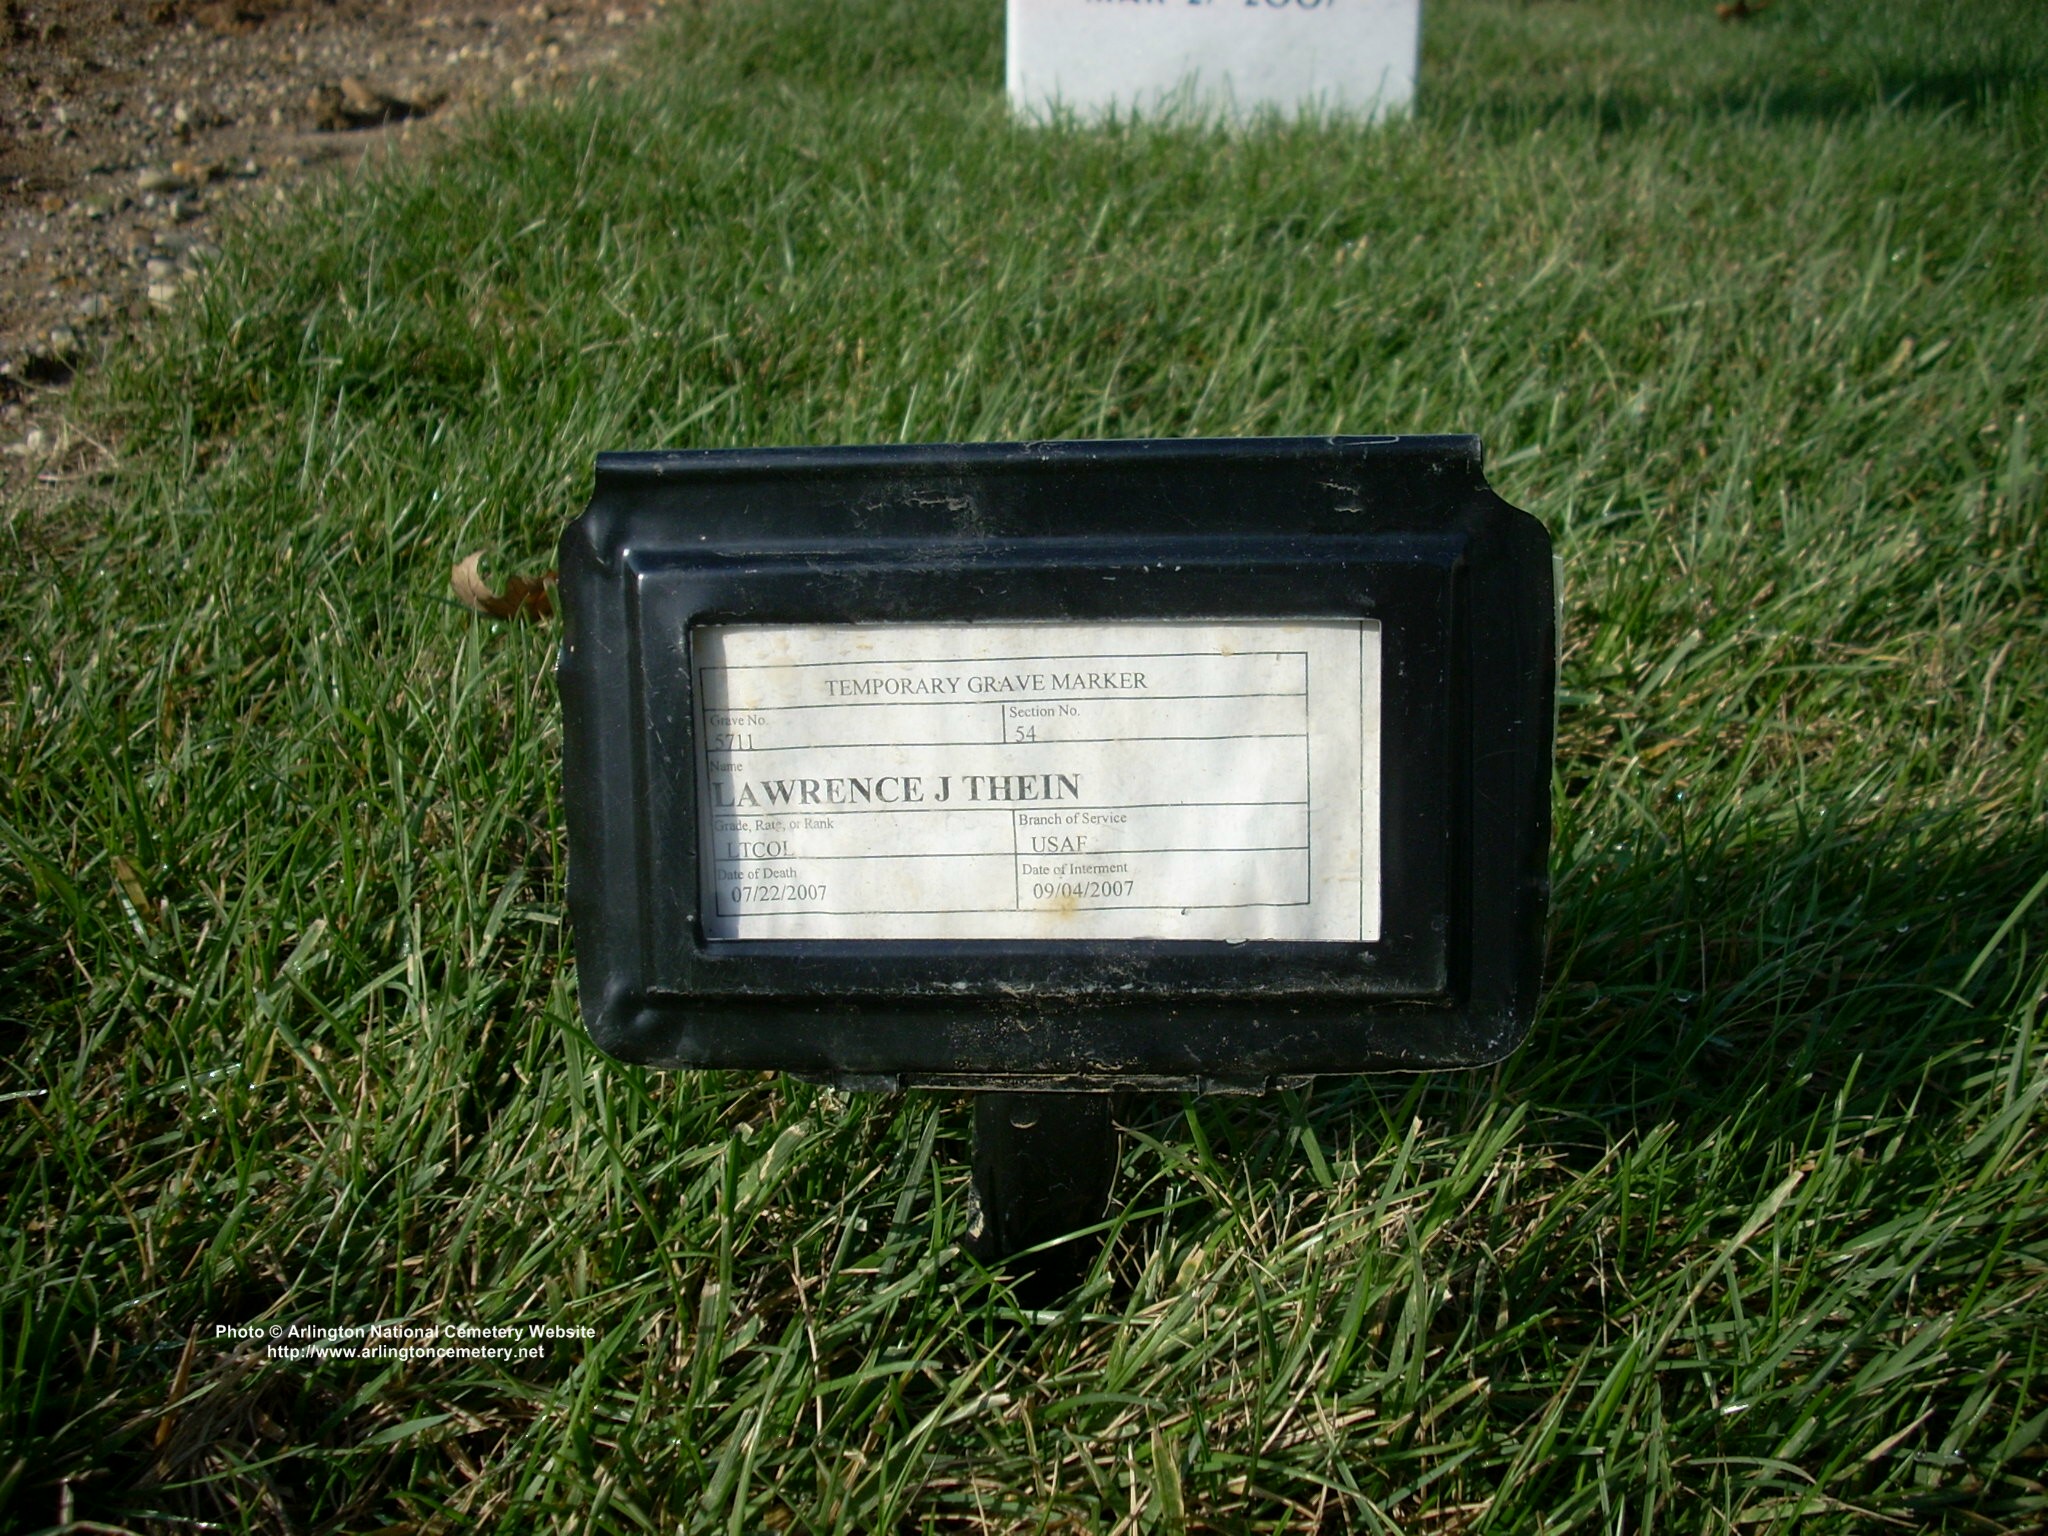 ljthein-gravesite-photo-november-2007-001